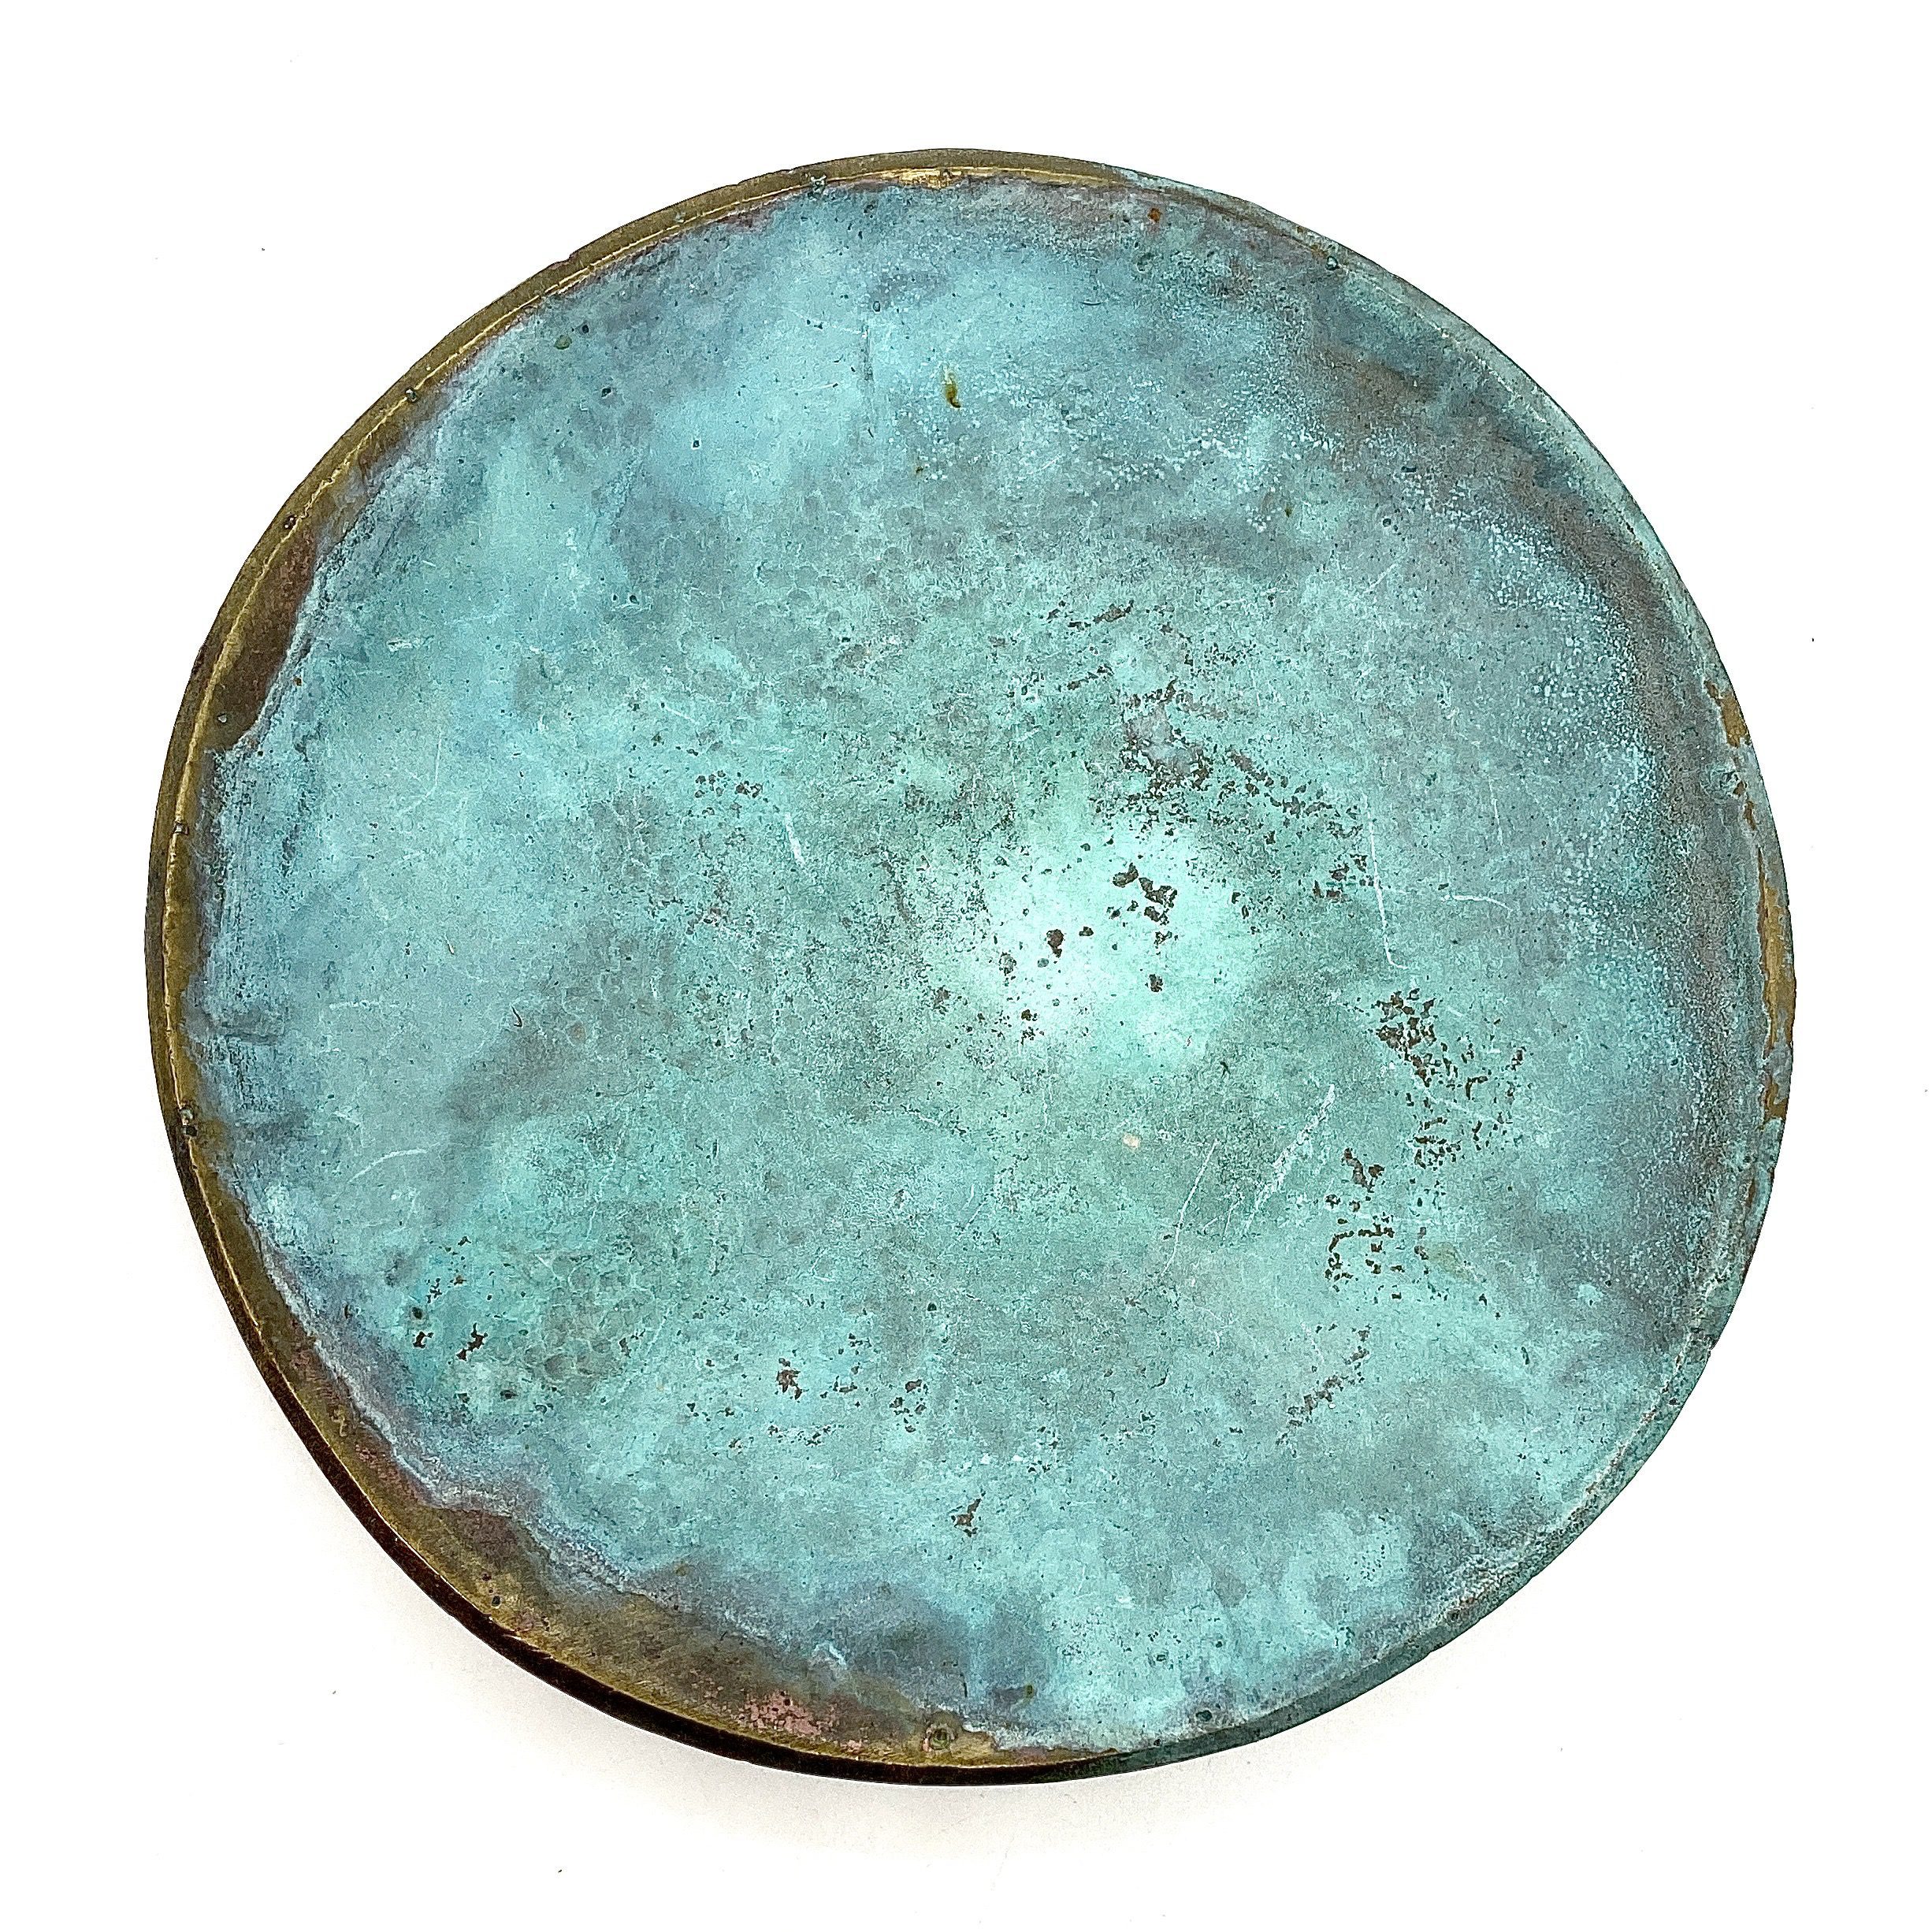 Robert lee morris hammered copper plates sculpture